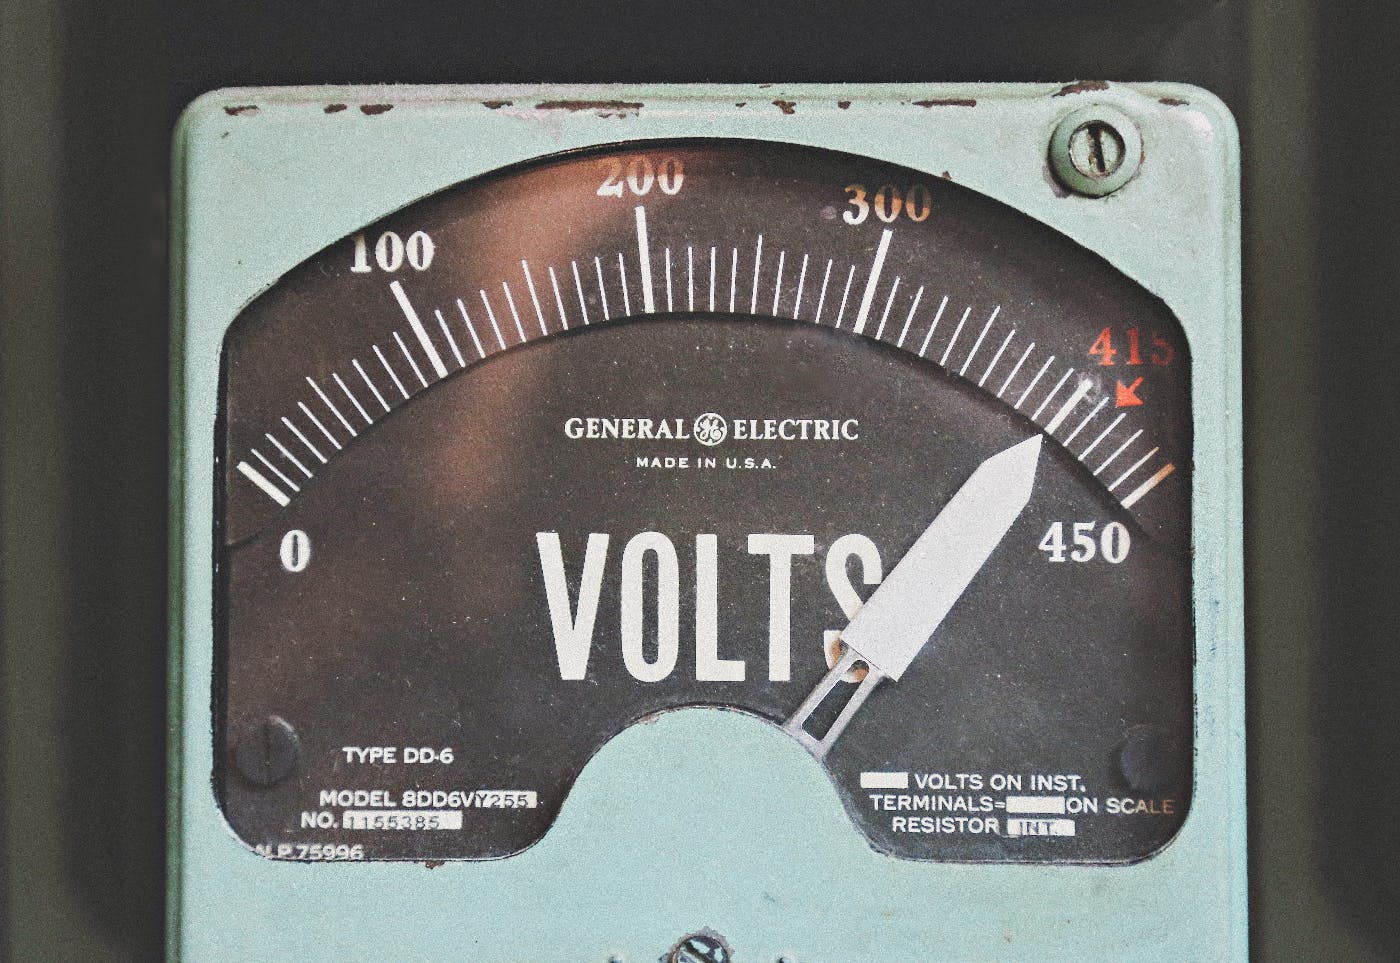 A light green GE voltmeter at 440